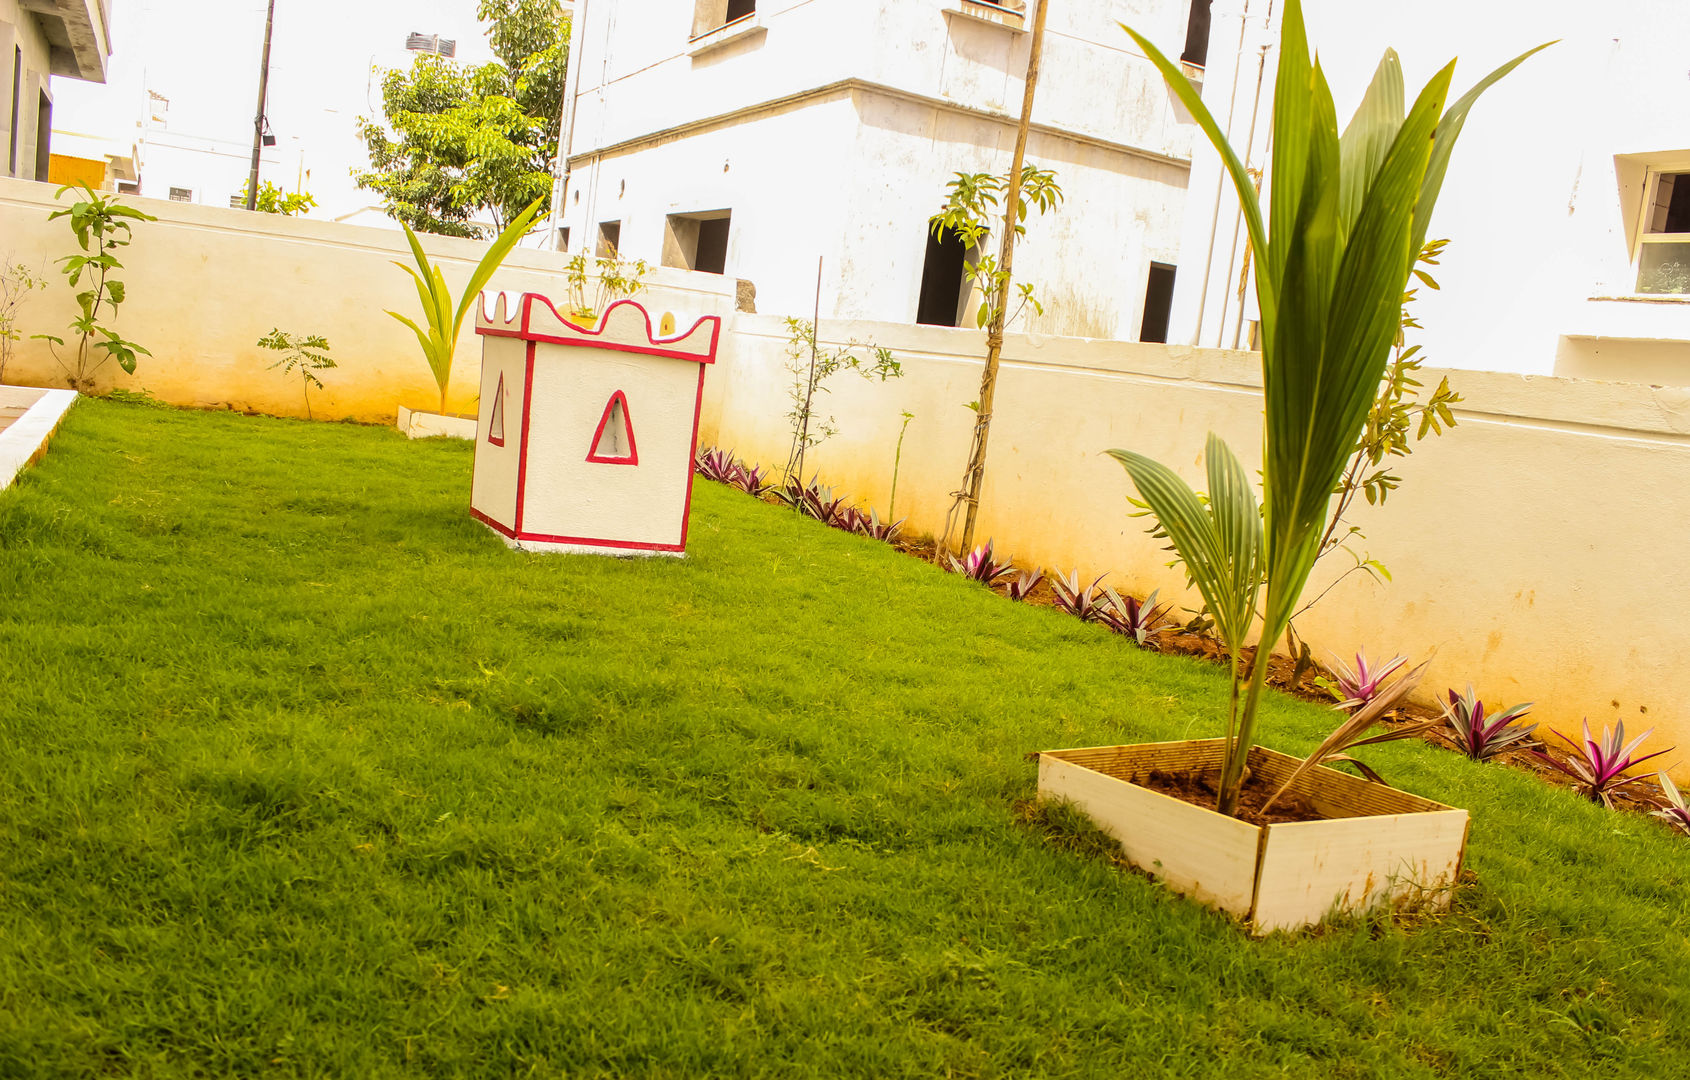 Villa at Appa Junction, Hyderabad., Happy Homes Designers Happy Homes Designers حديقة داخلية Interior landscaping